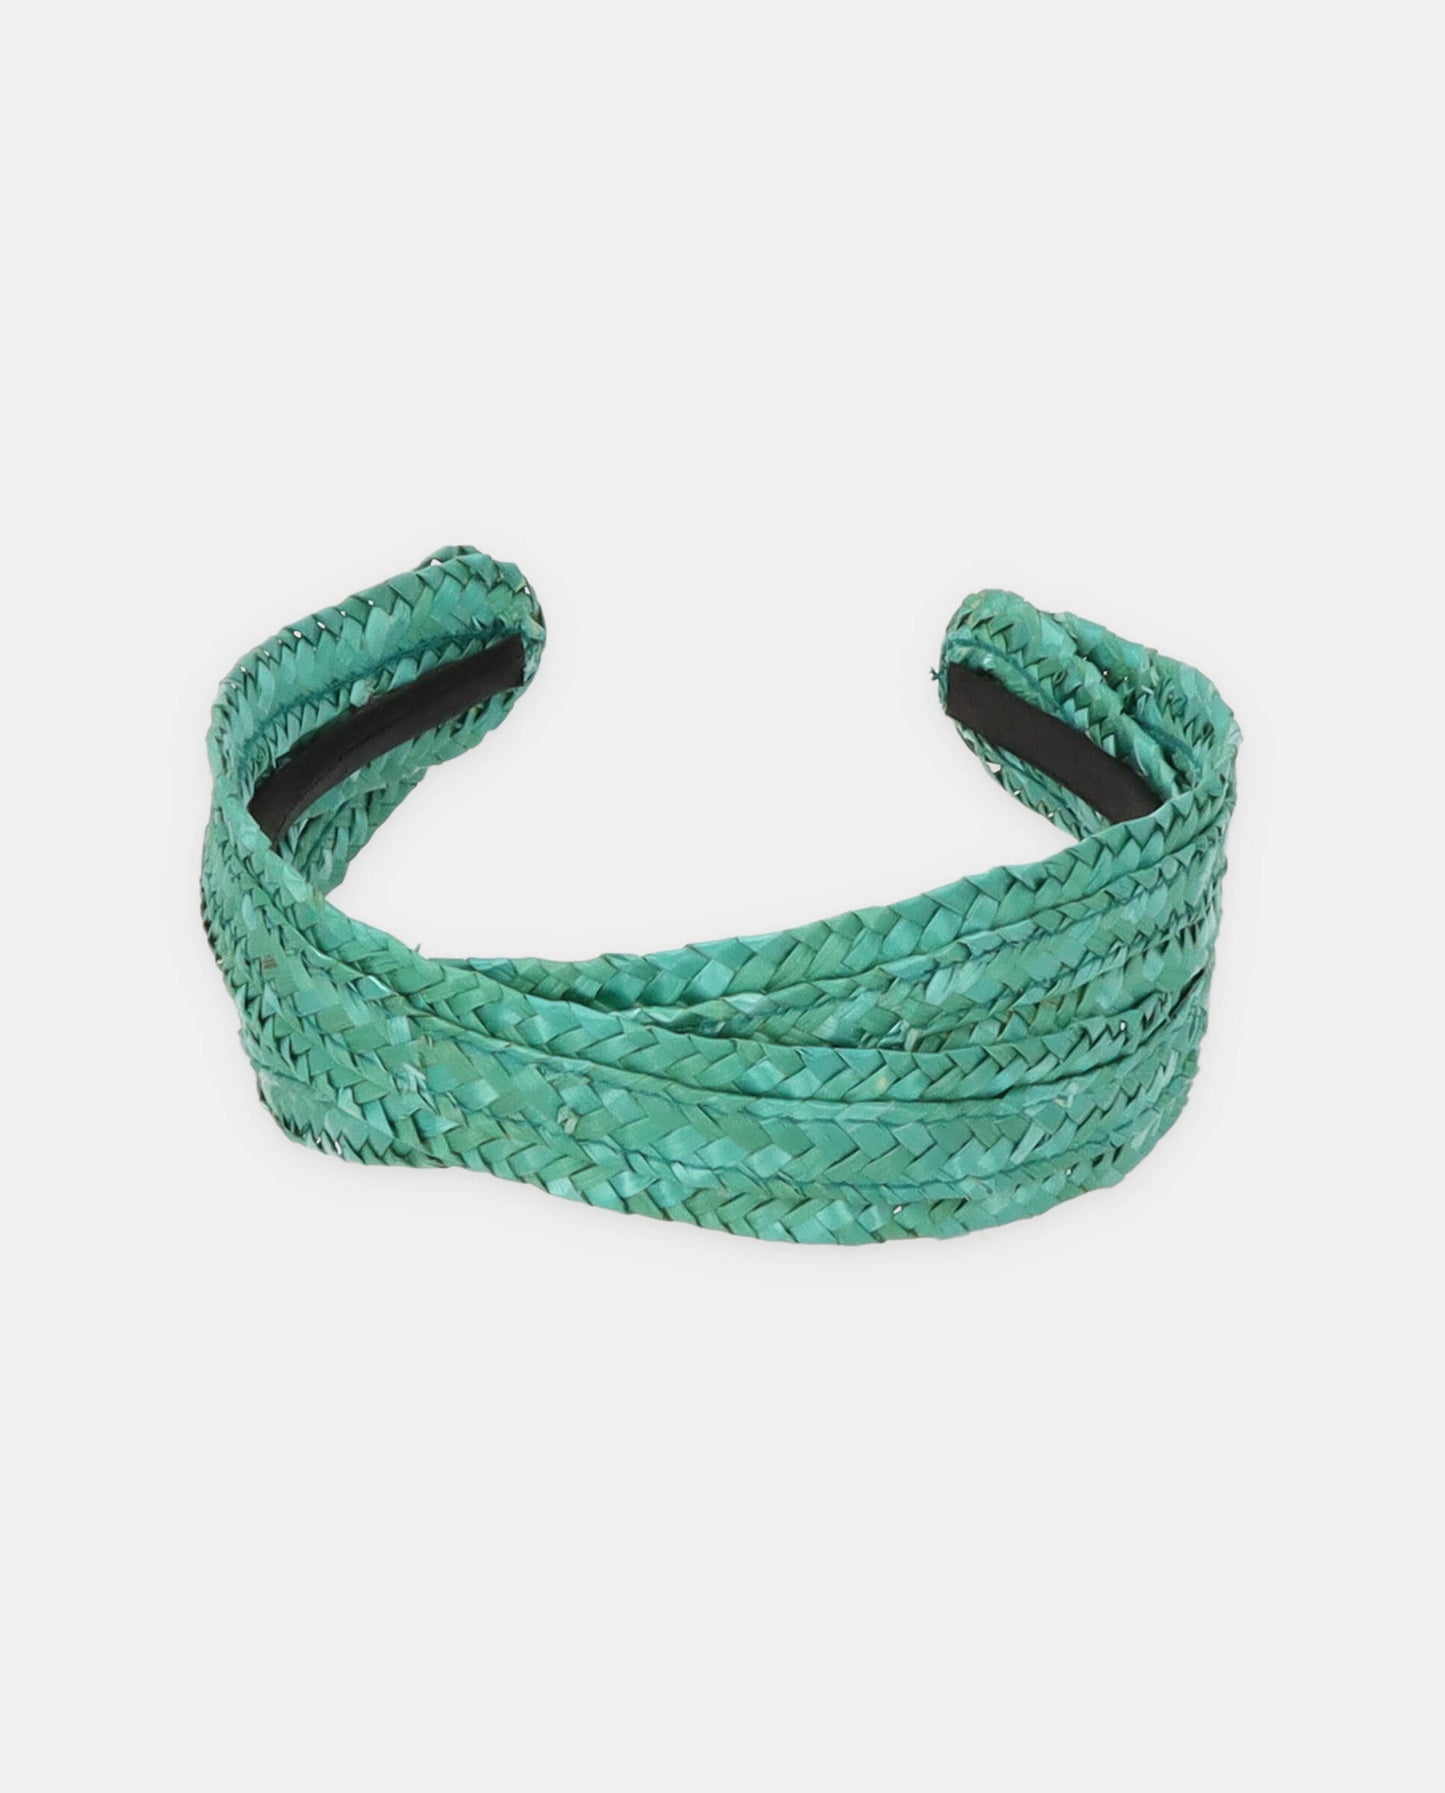 natural straw headband